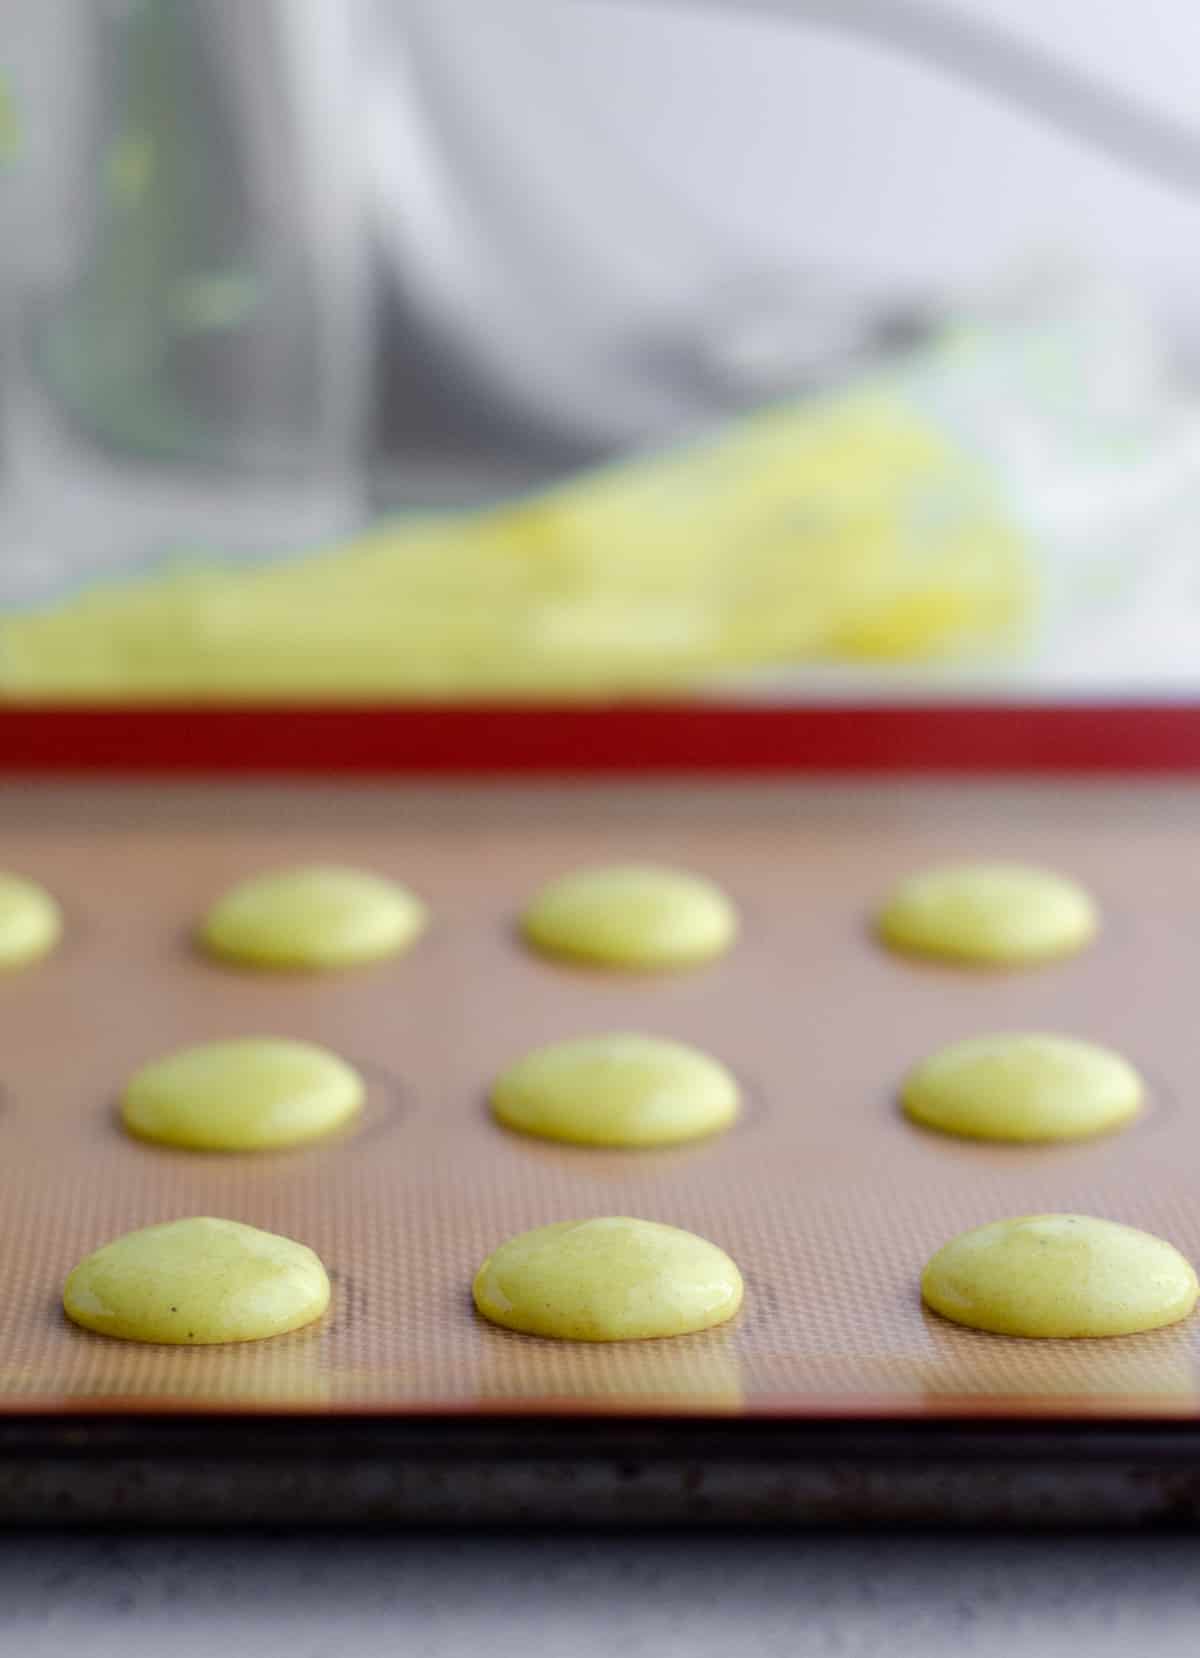 lemon macarons piped onto a baking sheet ready to bake